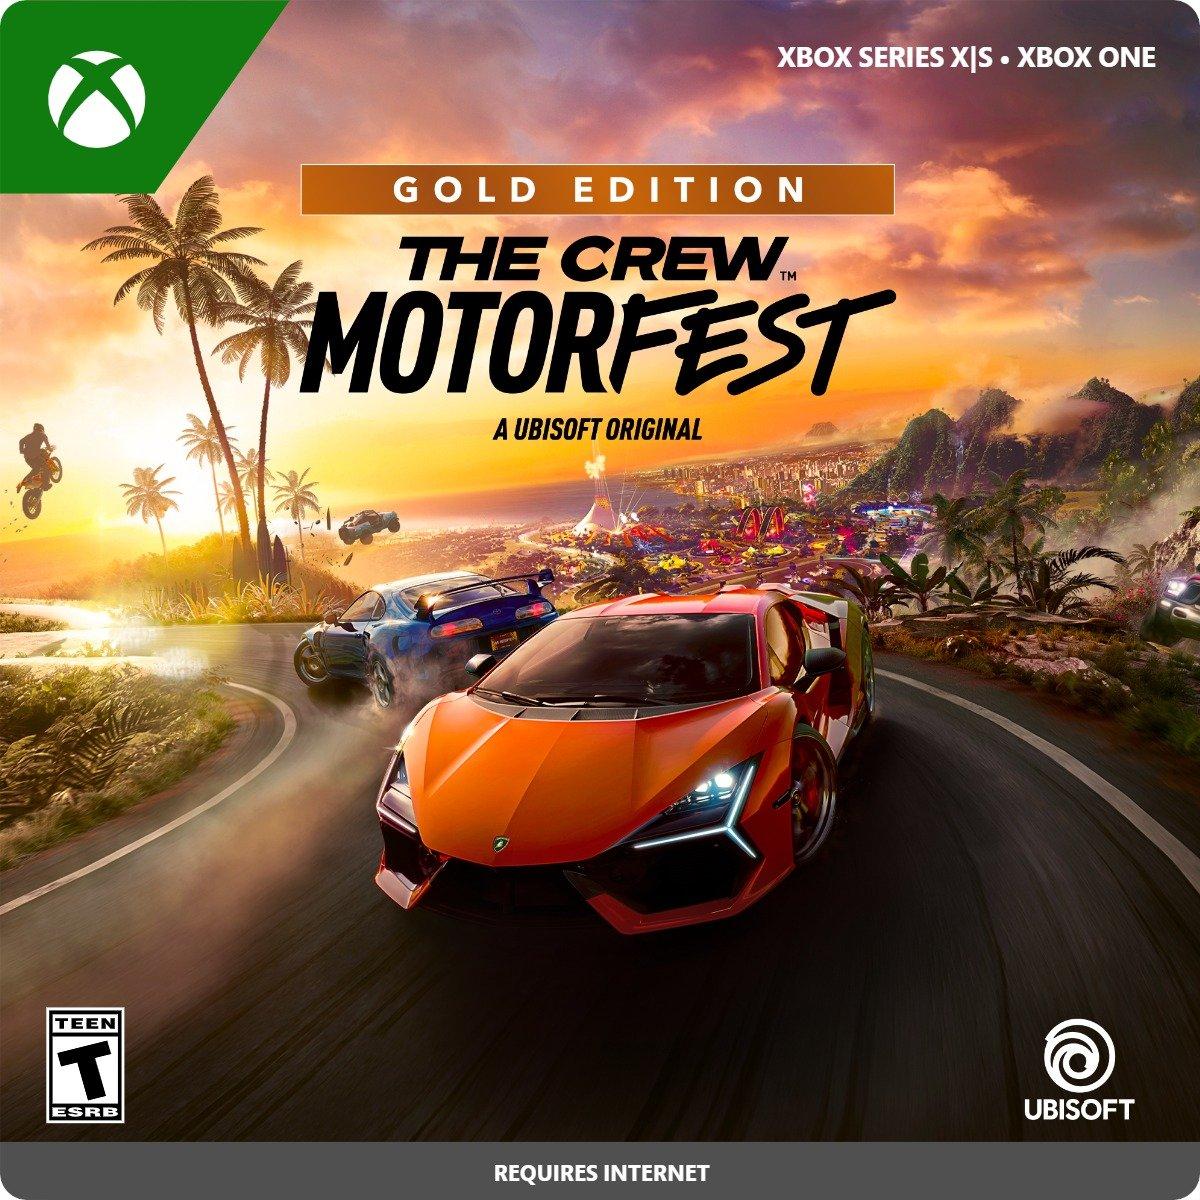 The Crew Motorfest review: driving towards the horizon